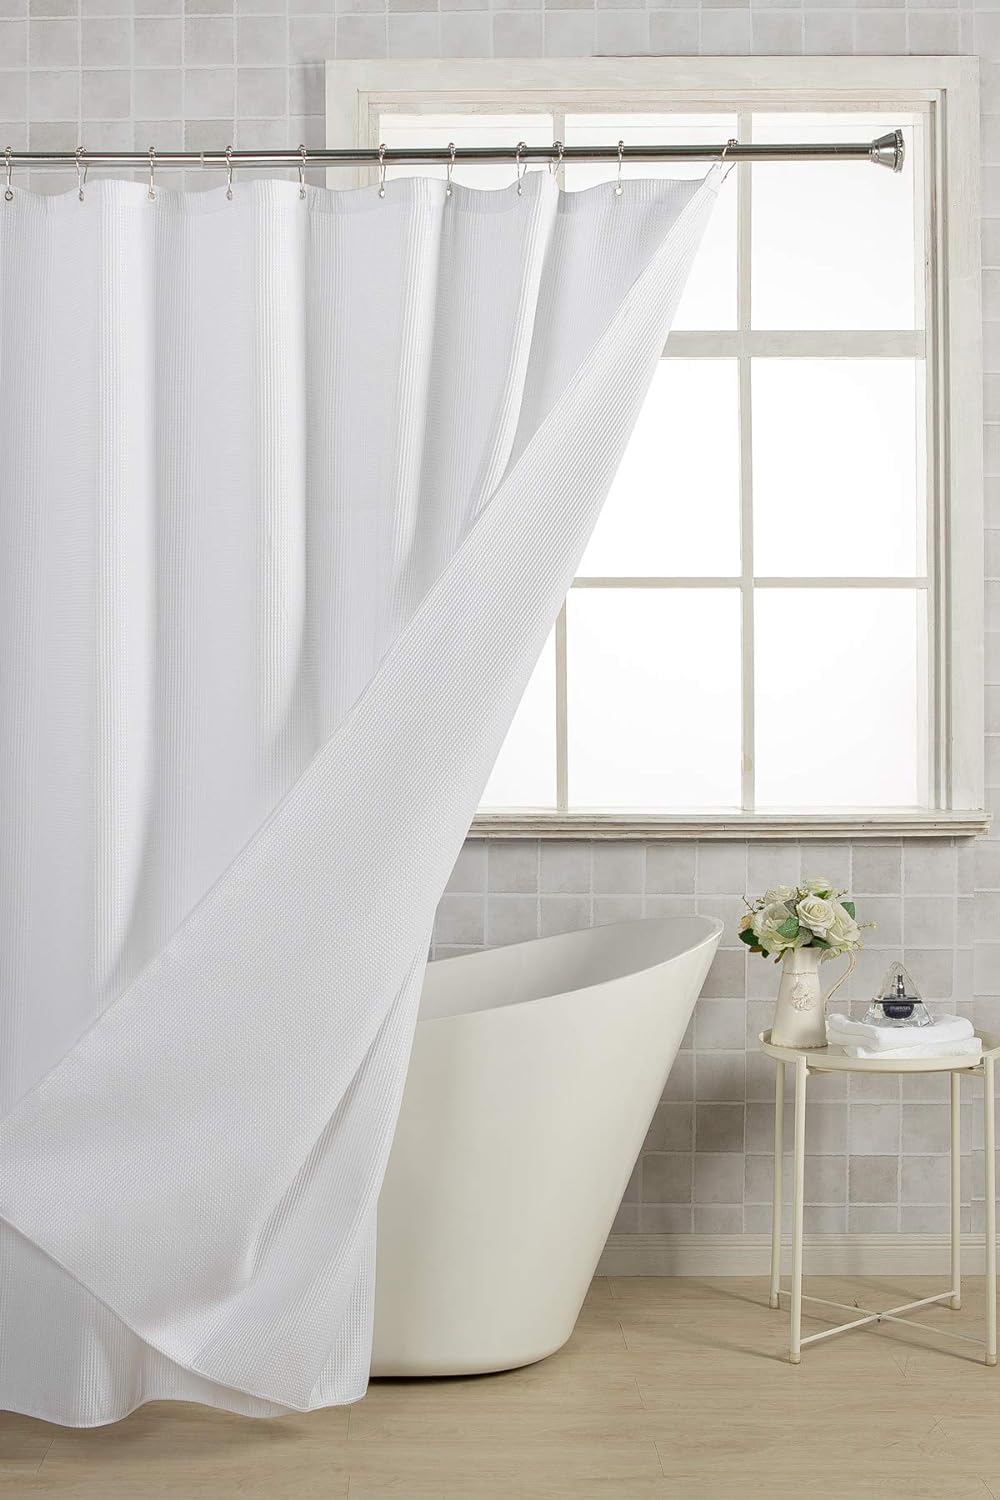 Grey Heavy Duty Fabric Shower Curtains with Waffle Weave Hotel Quality Bathroom Shower Curtains 72 x 72 Inches AmazerBath Waffle Shower Curtain